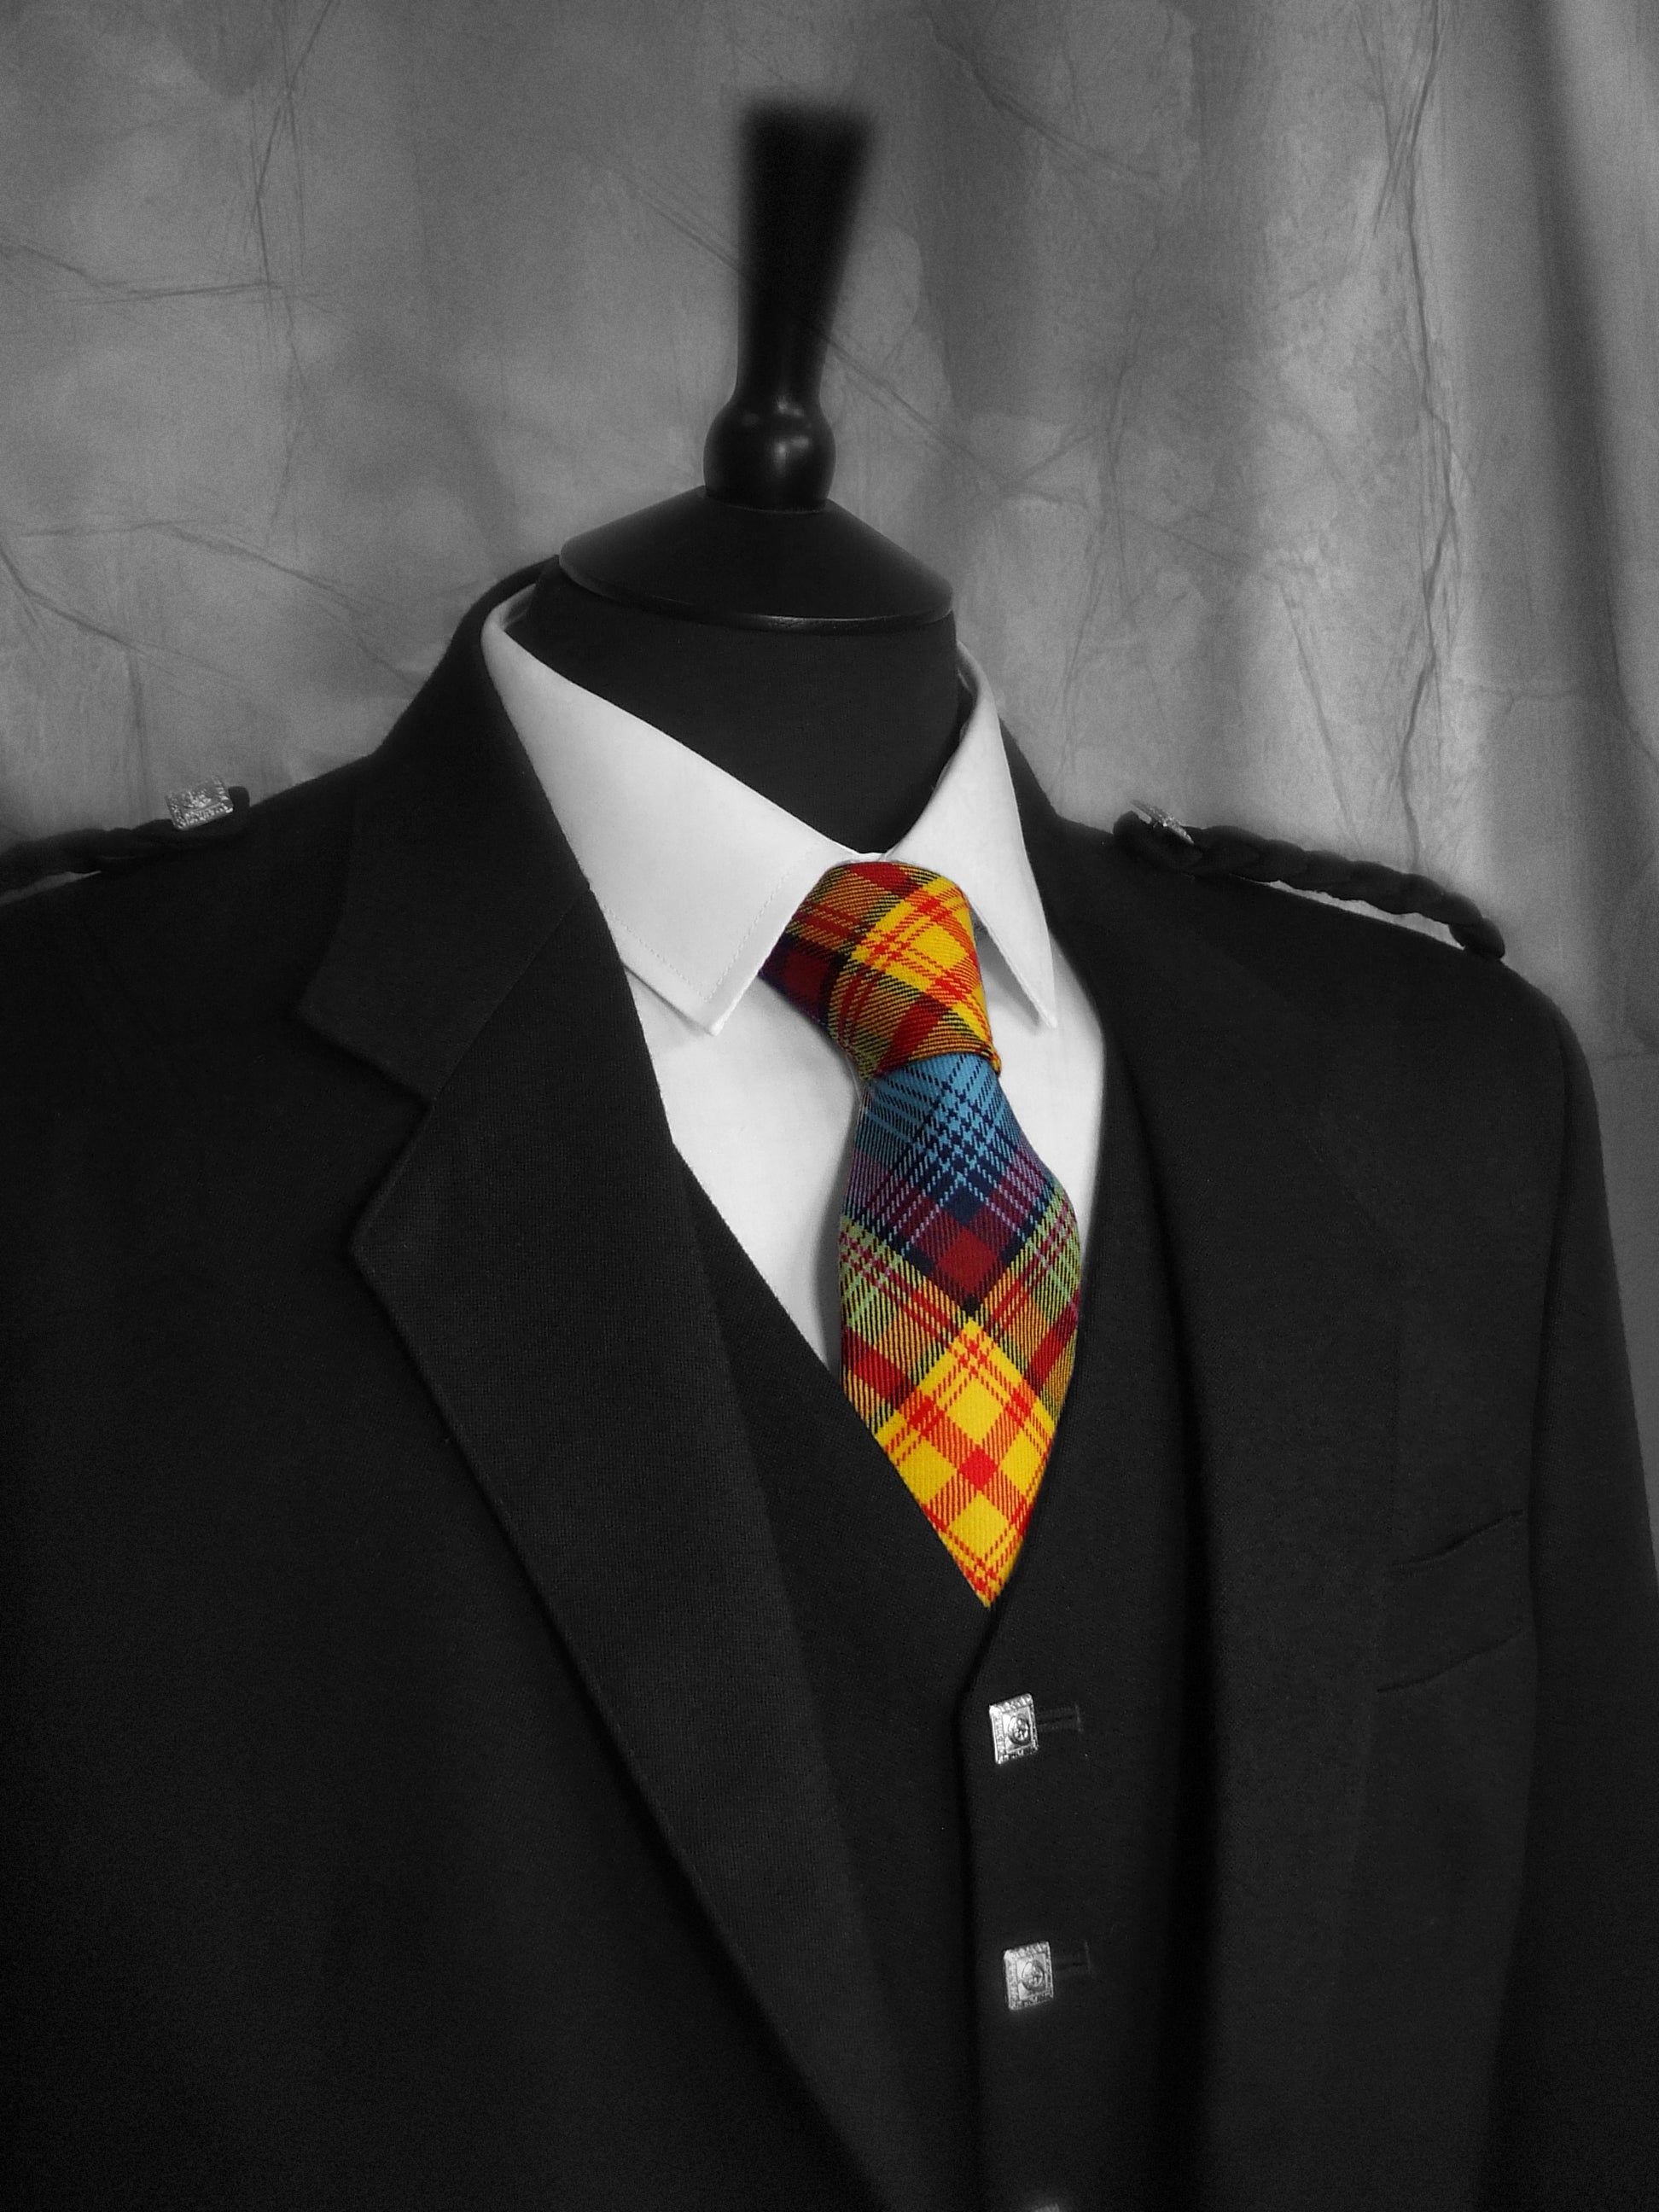 Scottish Independence Tartan Tie